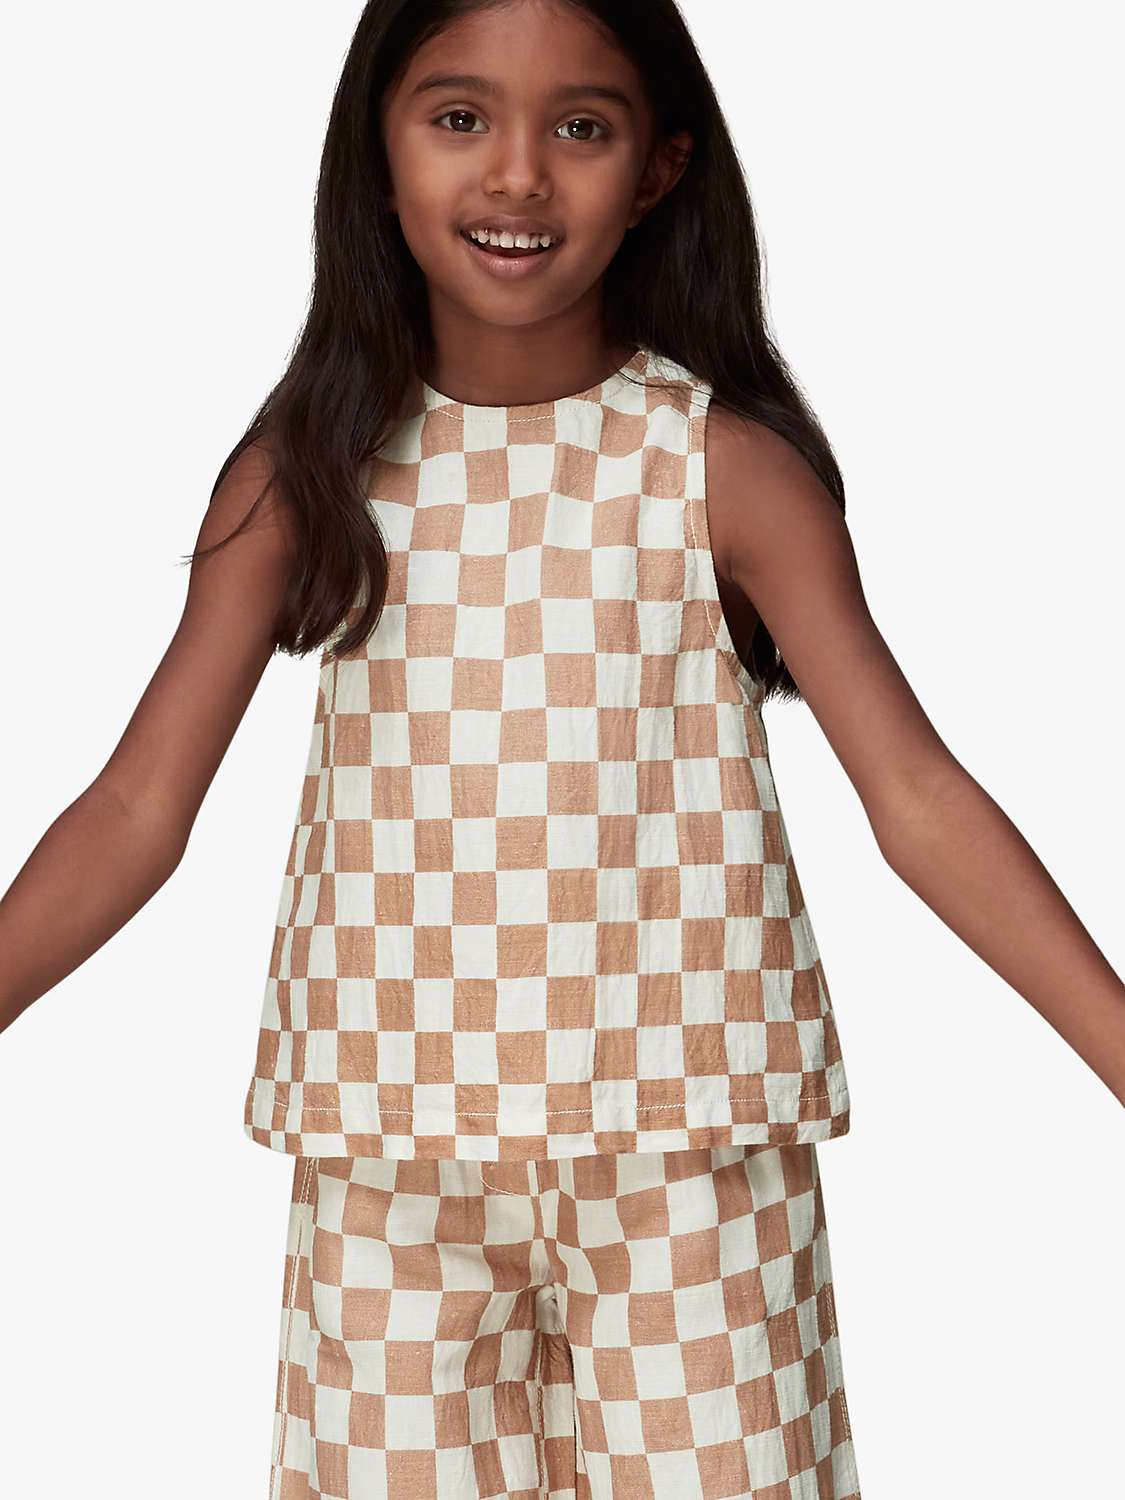 Buy Whistles Kids' Linen Blend Checkerboard Sleeveless Top, Multi Online at johnlewis.com